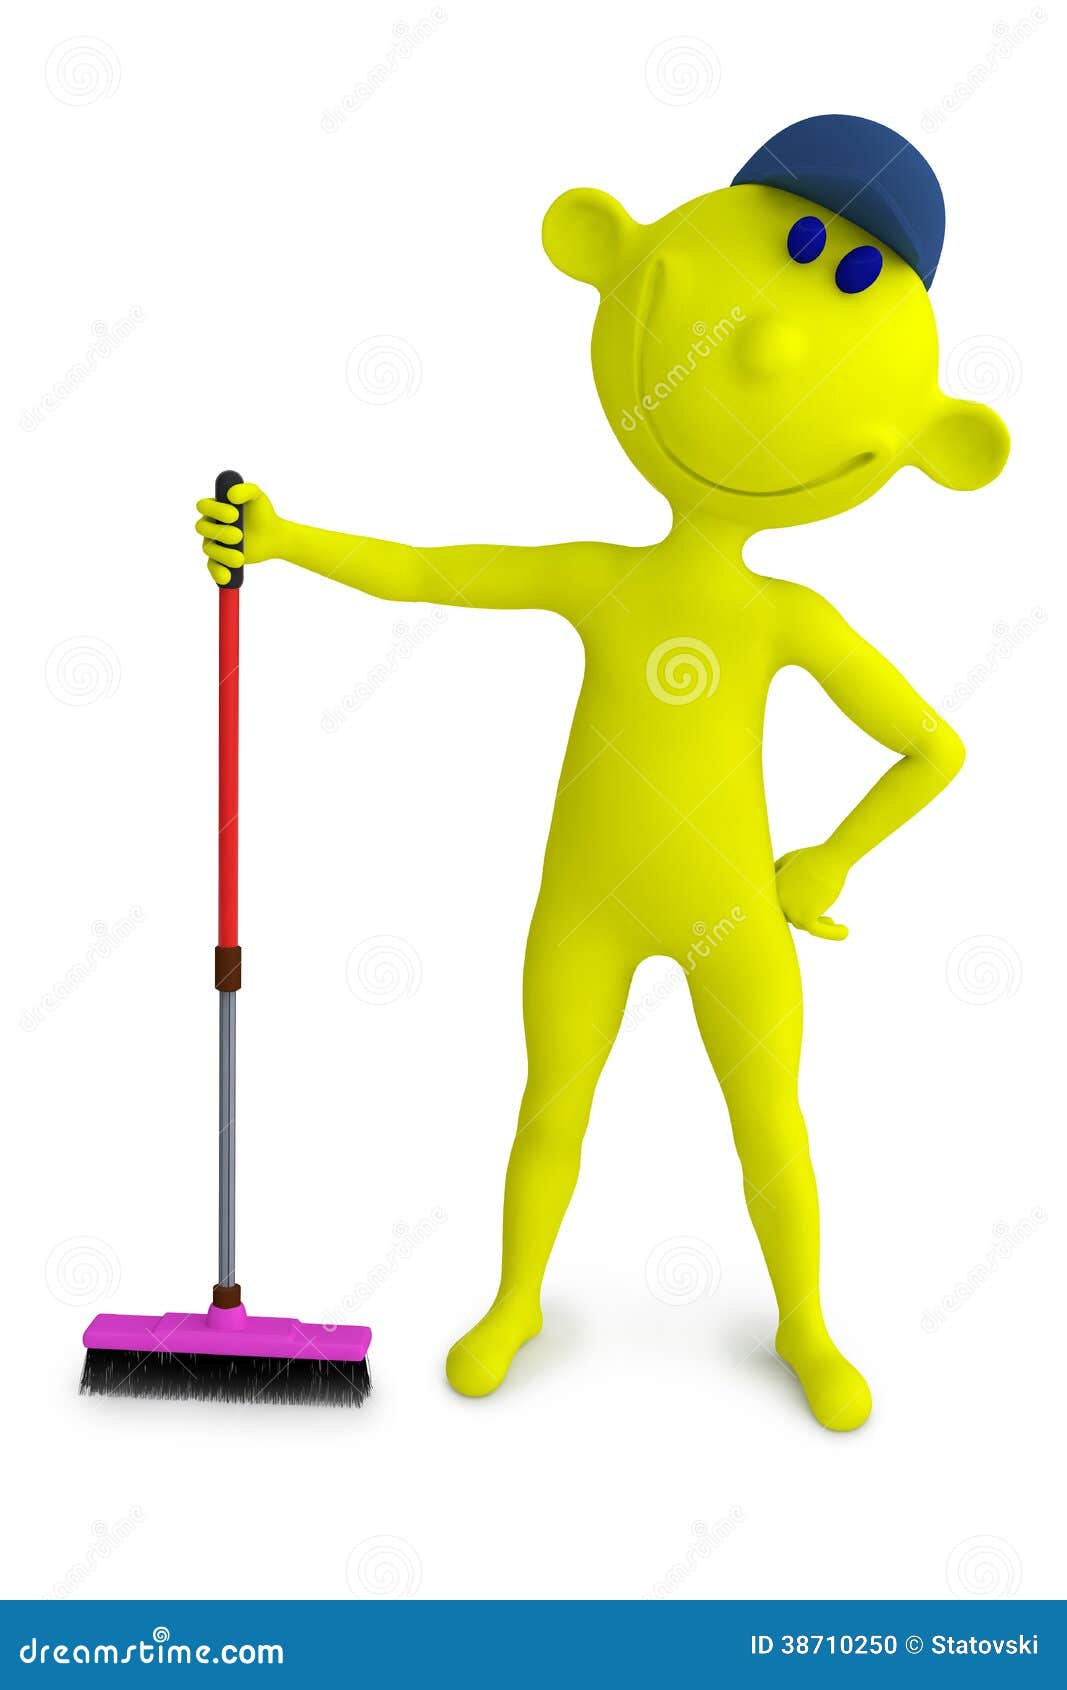 Caretaker. 3D illustration yellow boy with mop